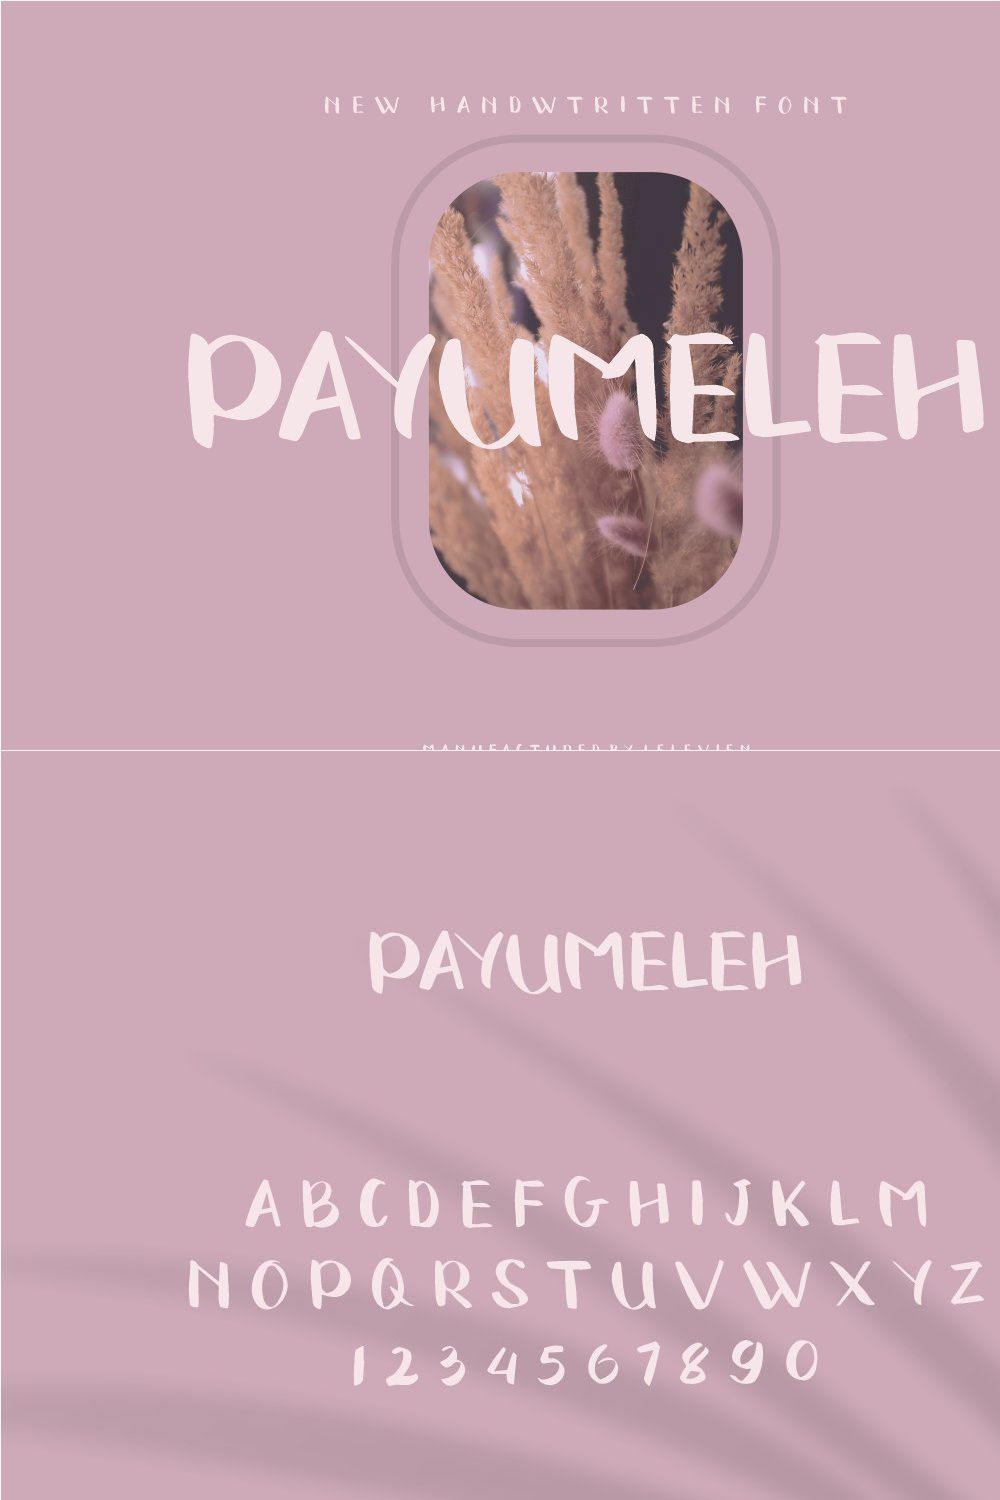 Payumeleh pinterest preview image.